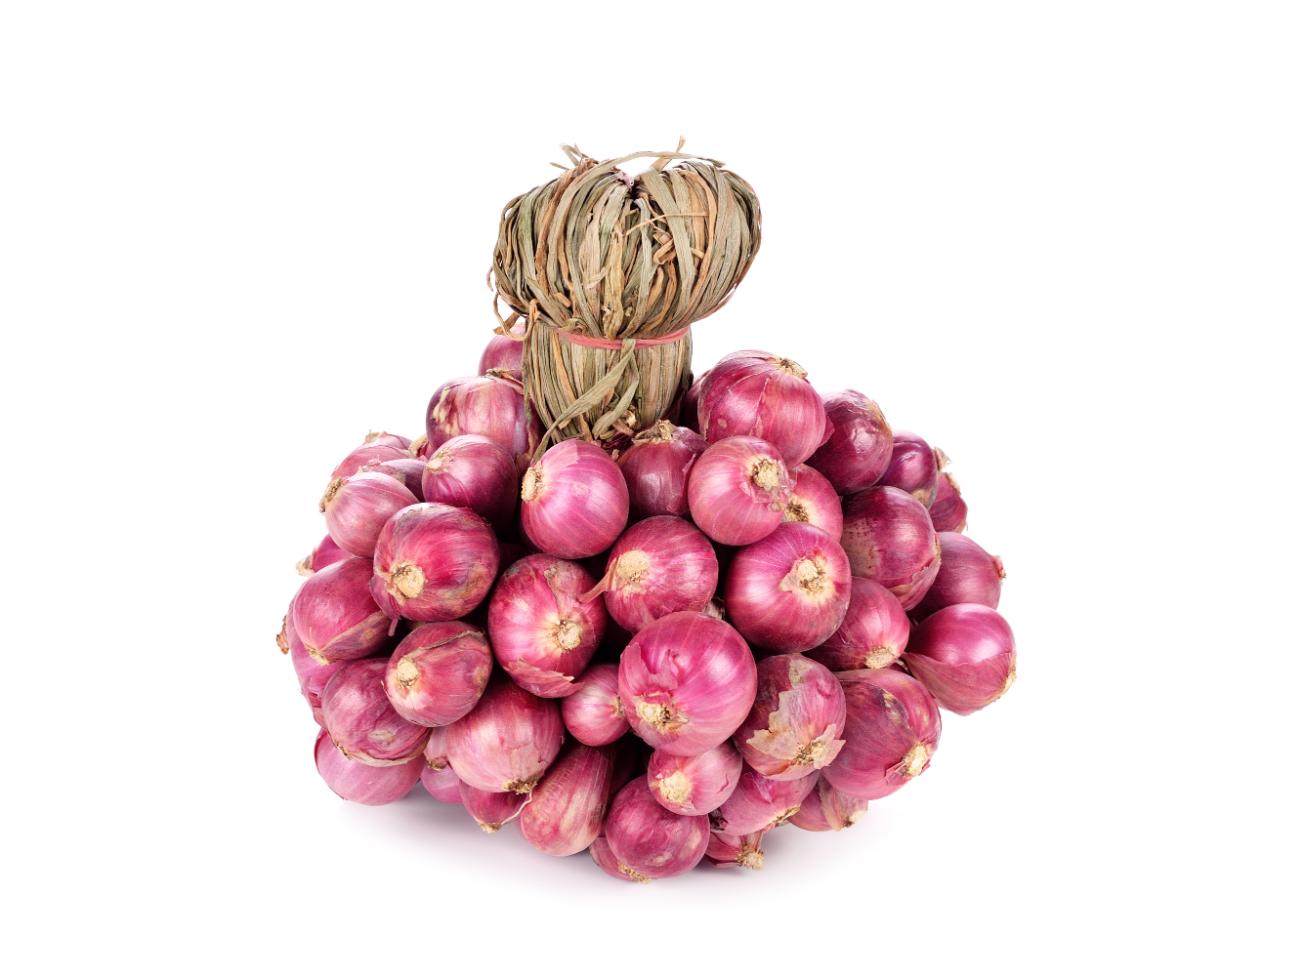 Organically Grown Spring Onions